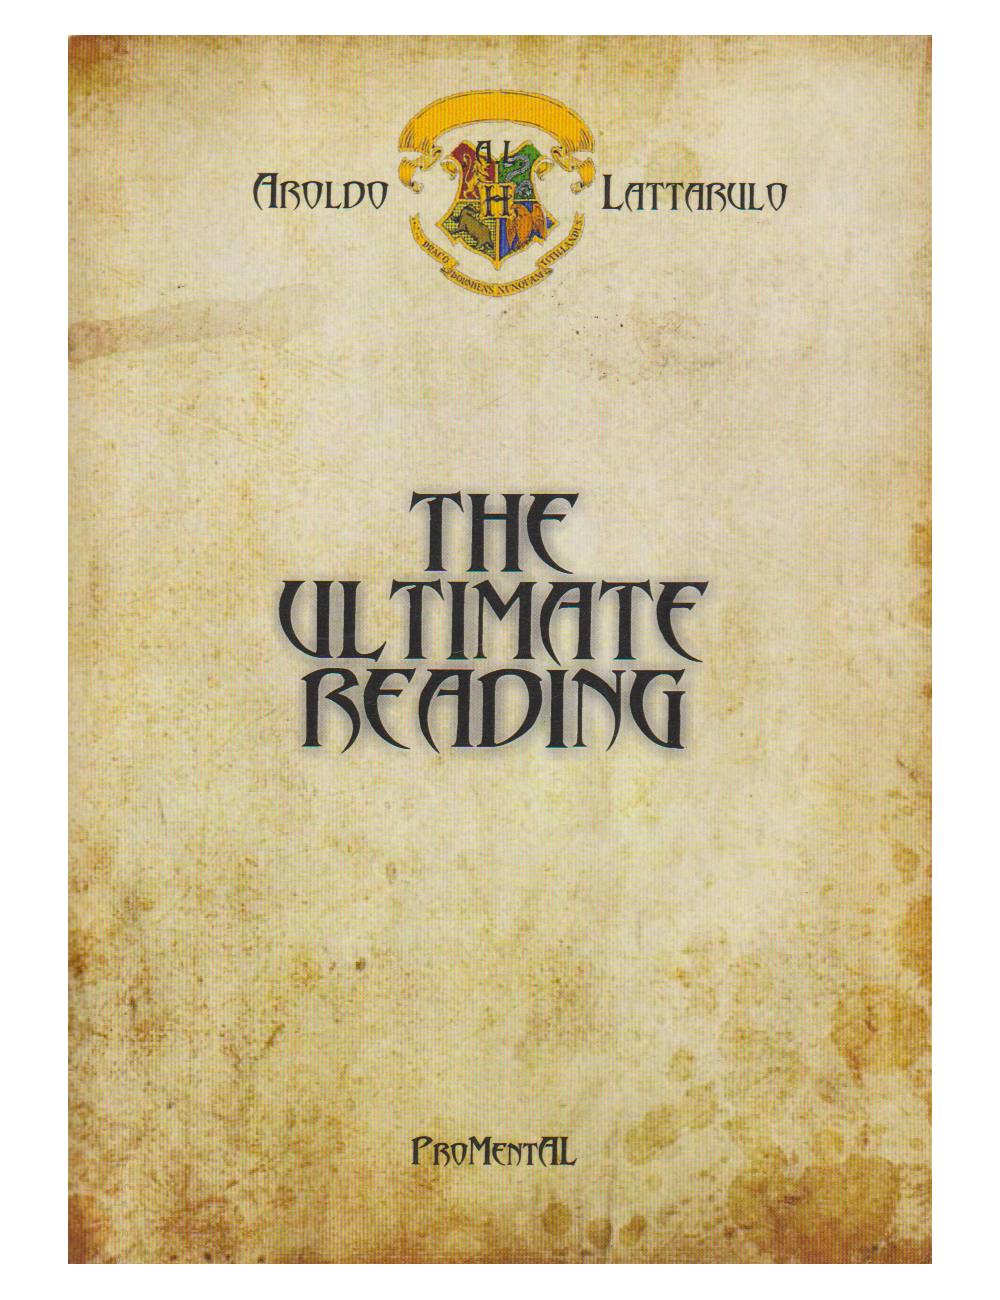 THE ULTIMATE READING (AROLDO LATTARULO)